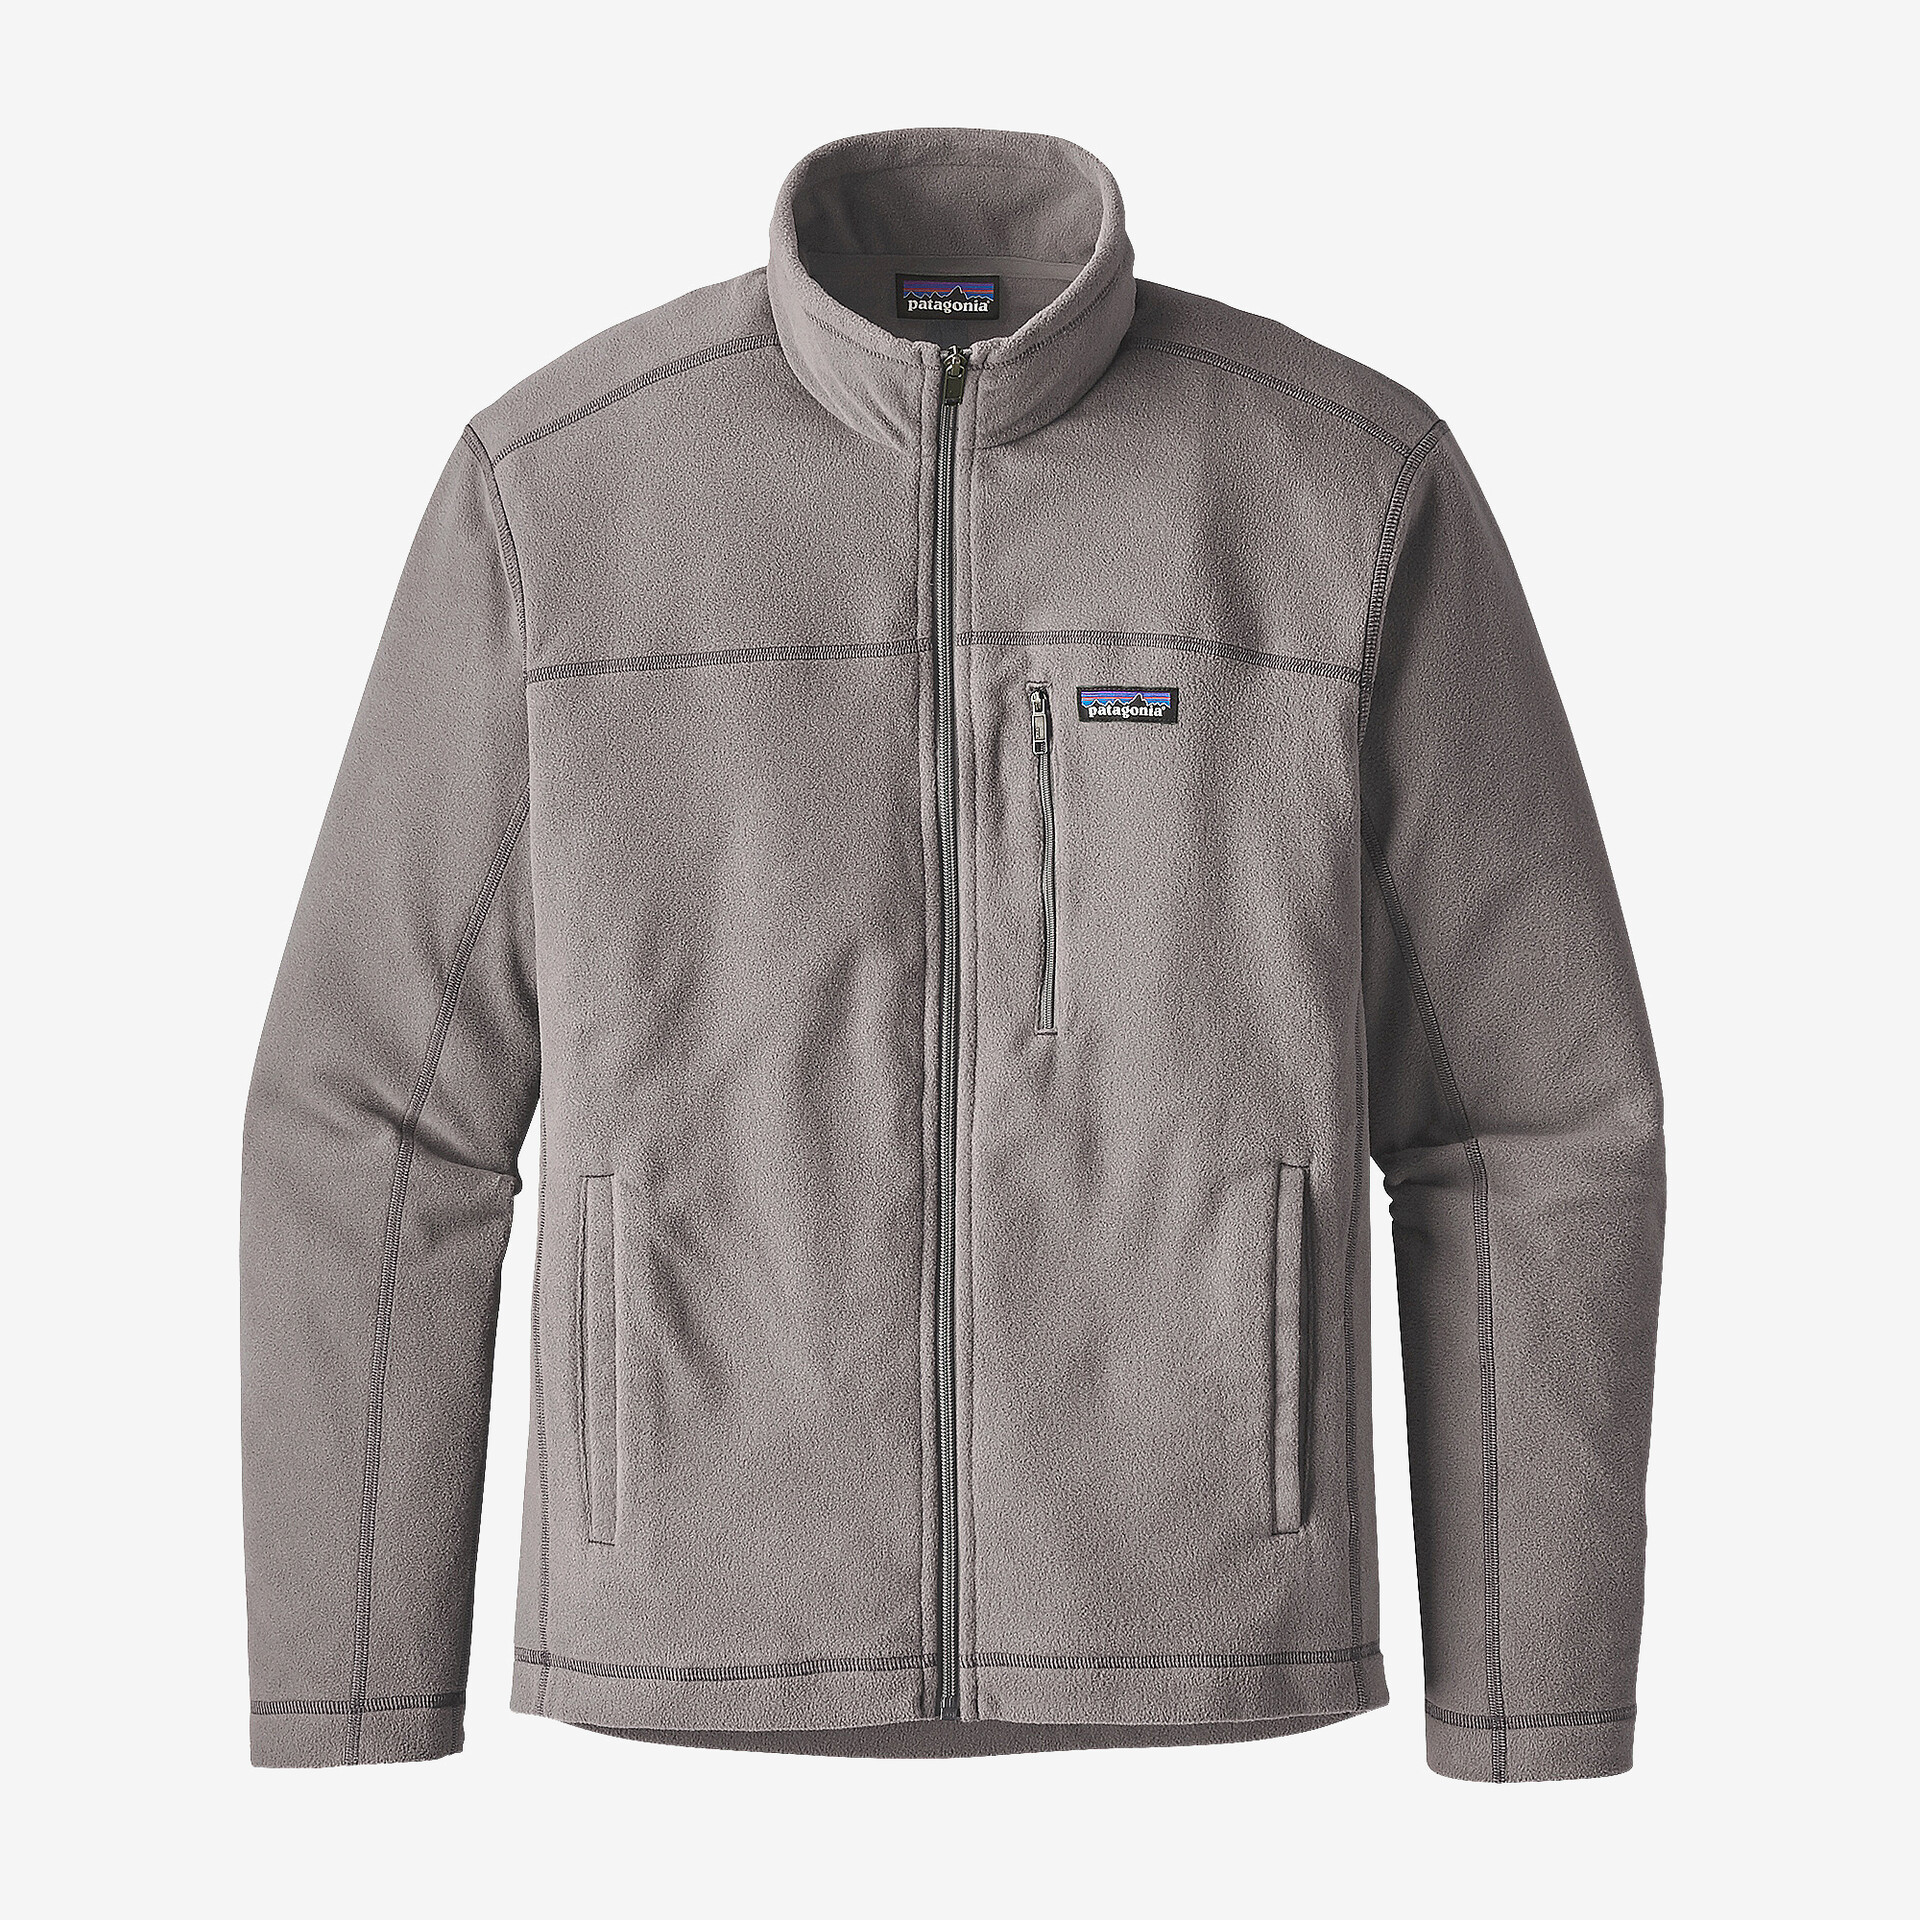 Мужская флисовая куртка Micro D Patagonia, серый